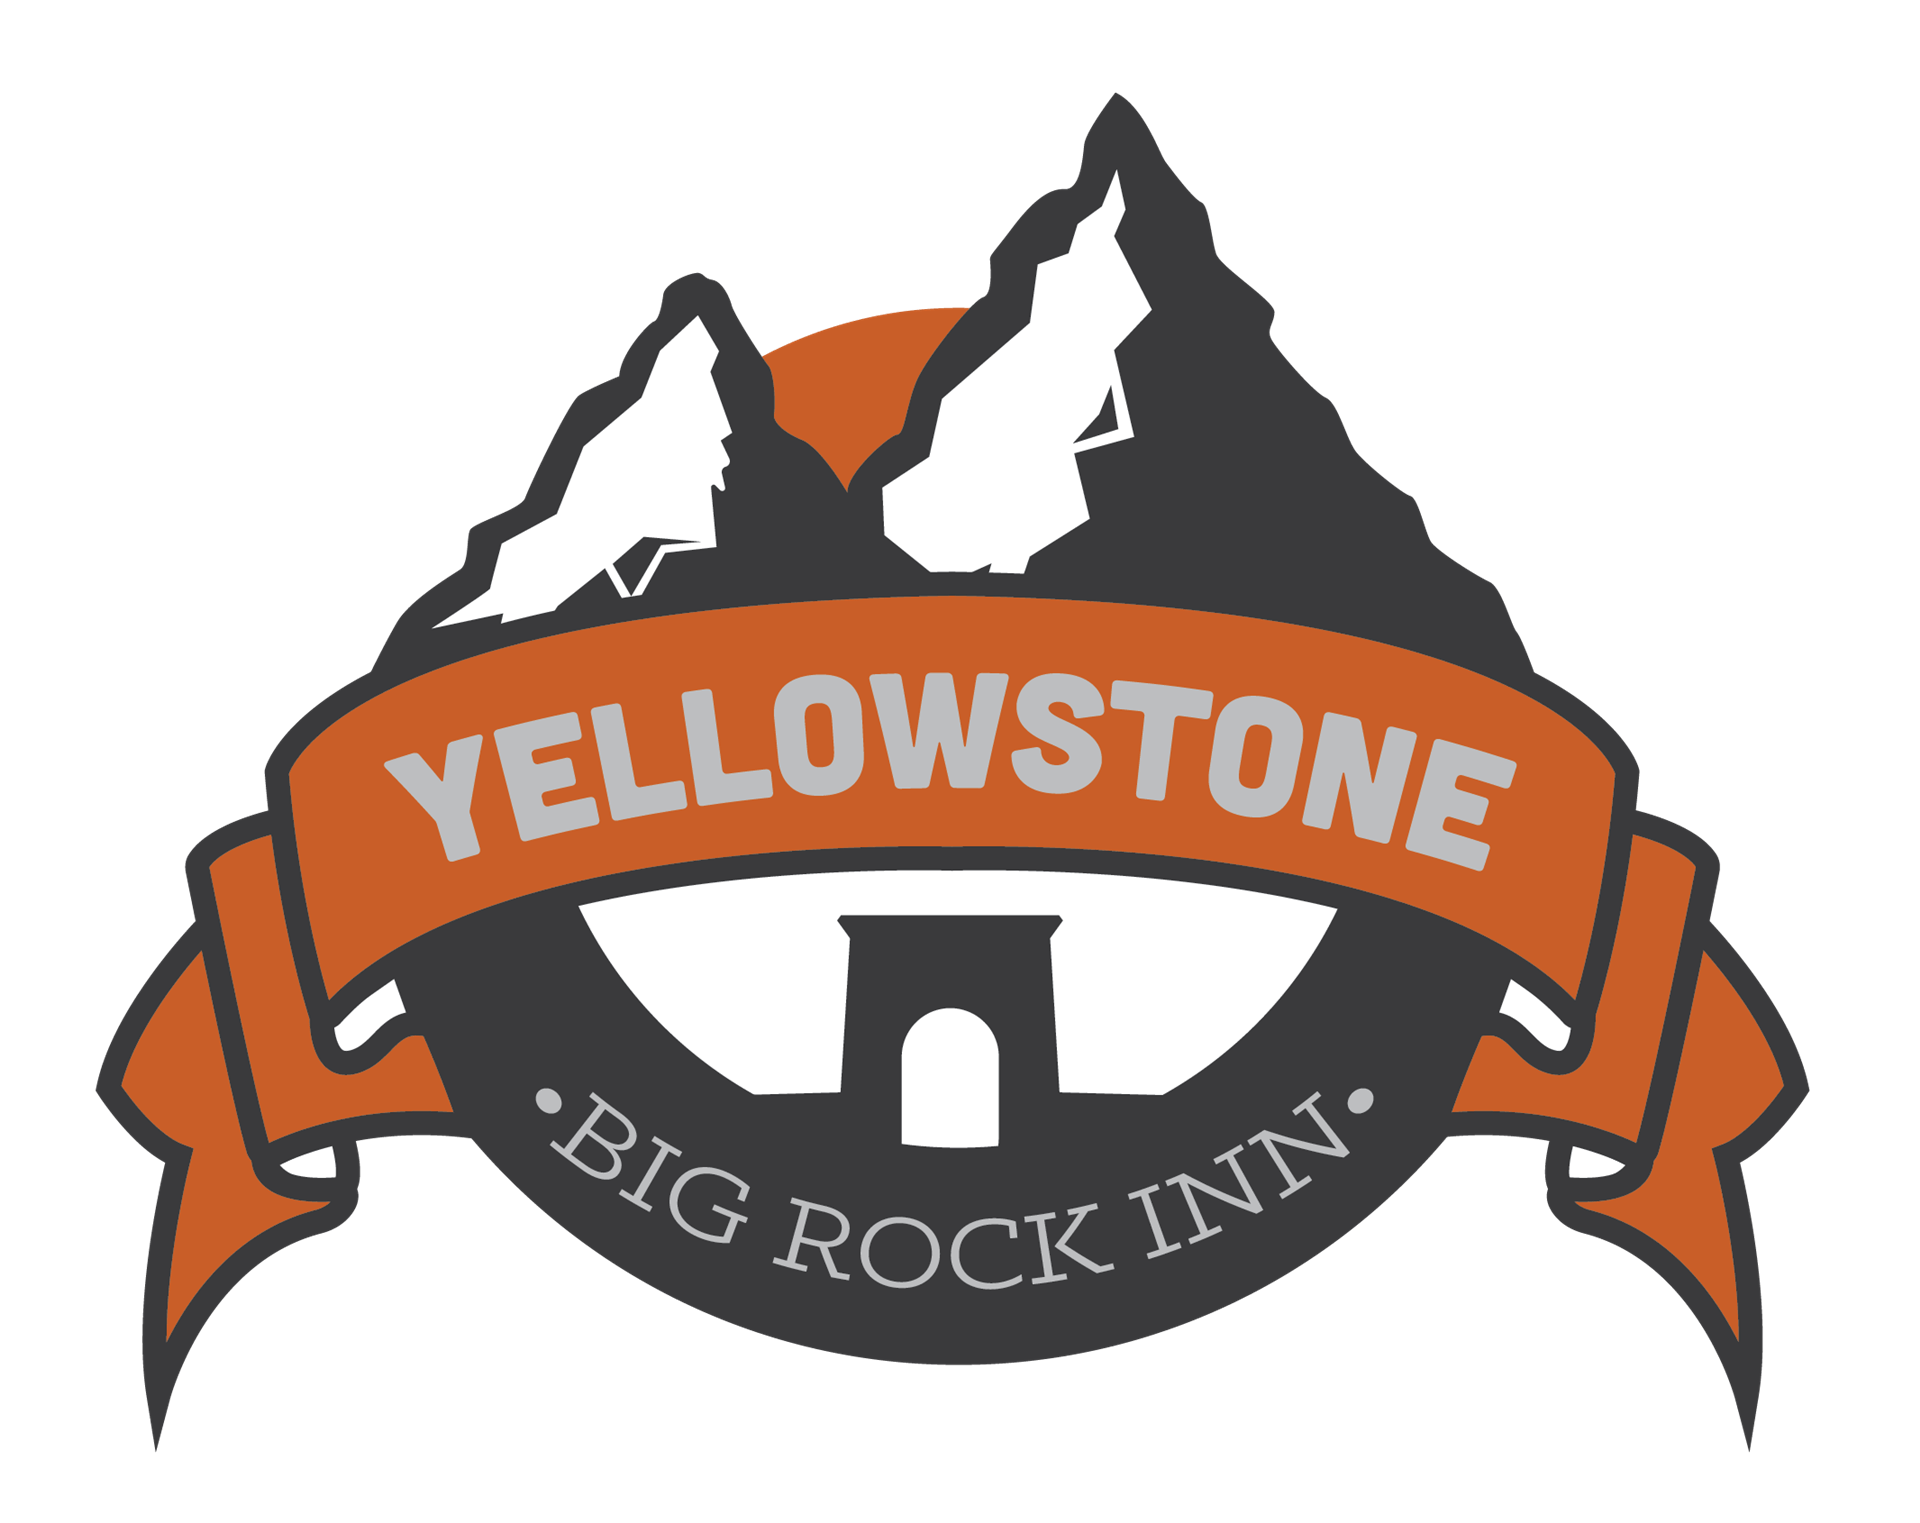 Yellowstone Logo - Yellowstone Big Rock Inn Official Site. Inns in Gardiner